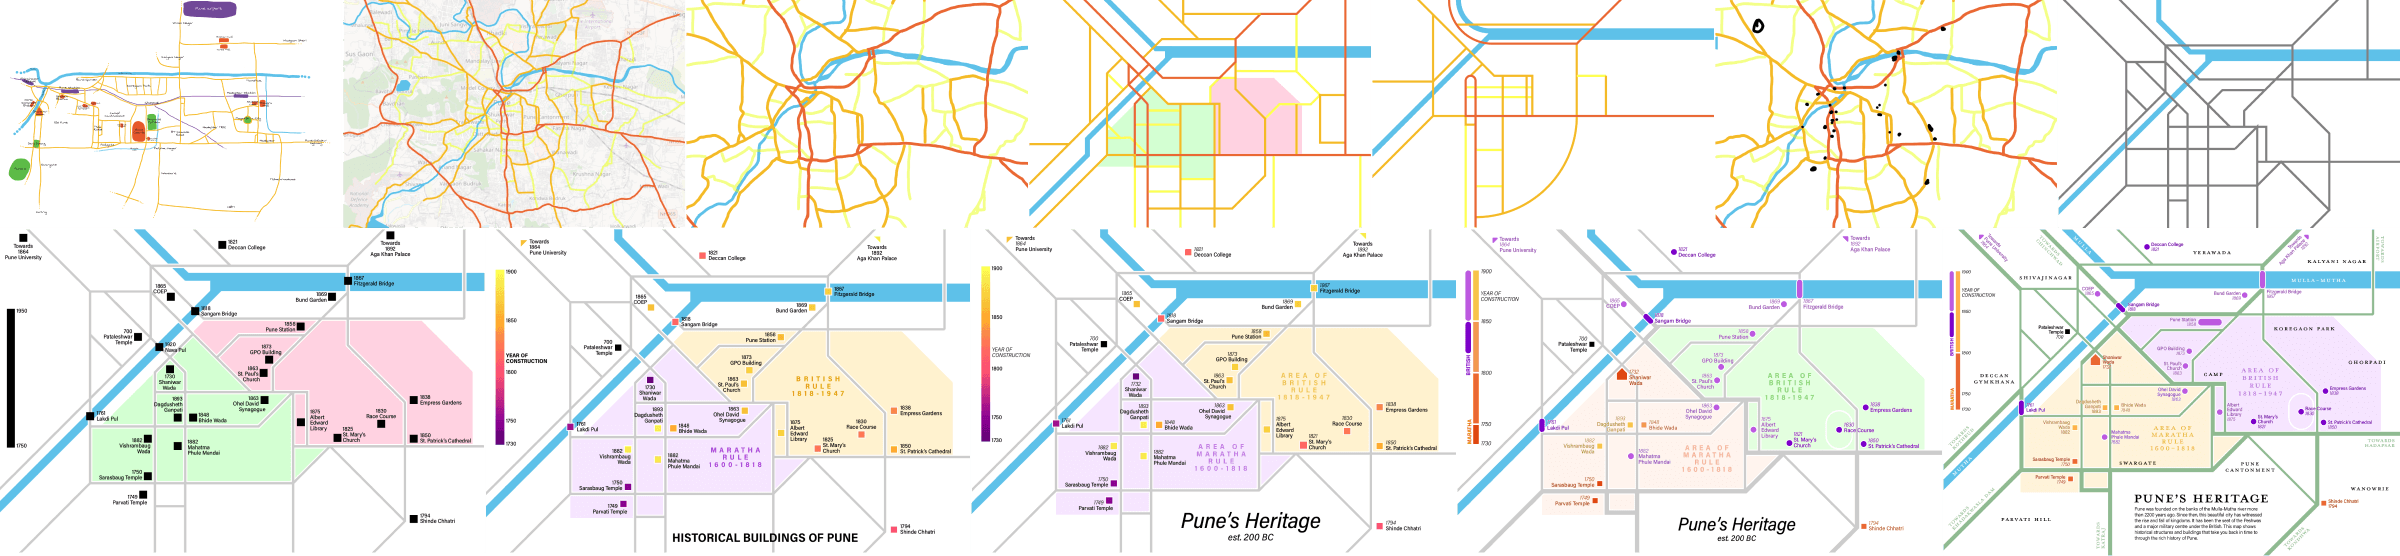 Process of Schematic map of Pune by Srishti